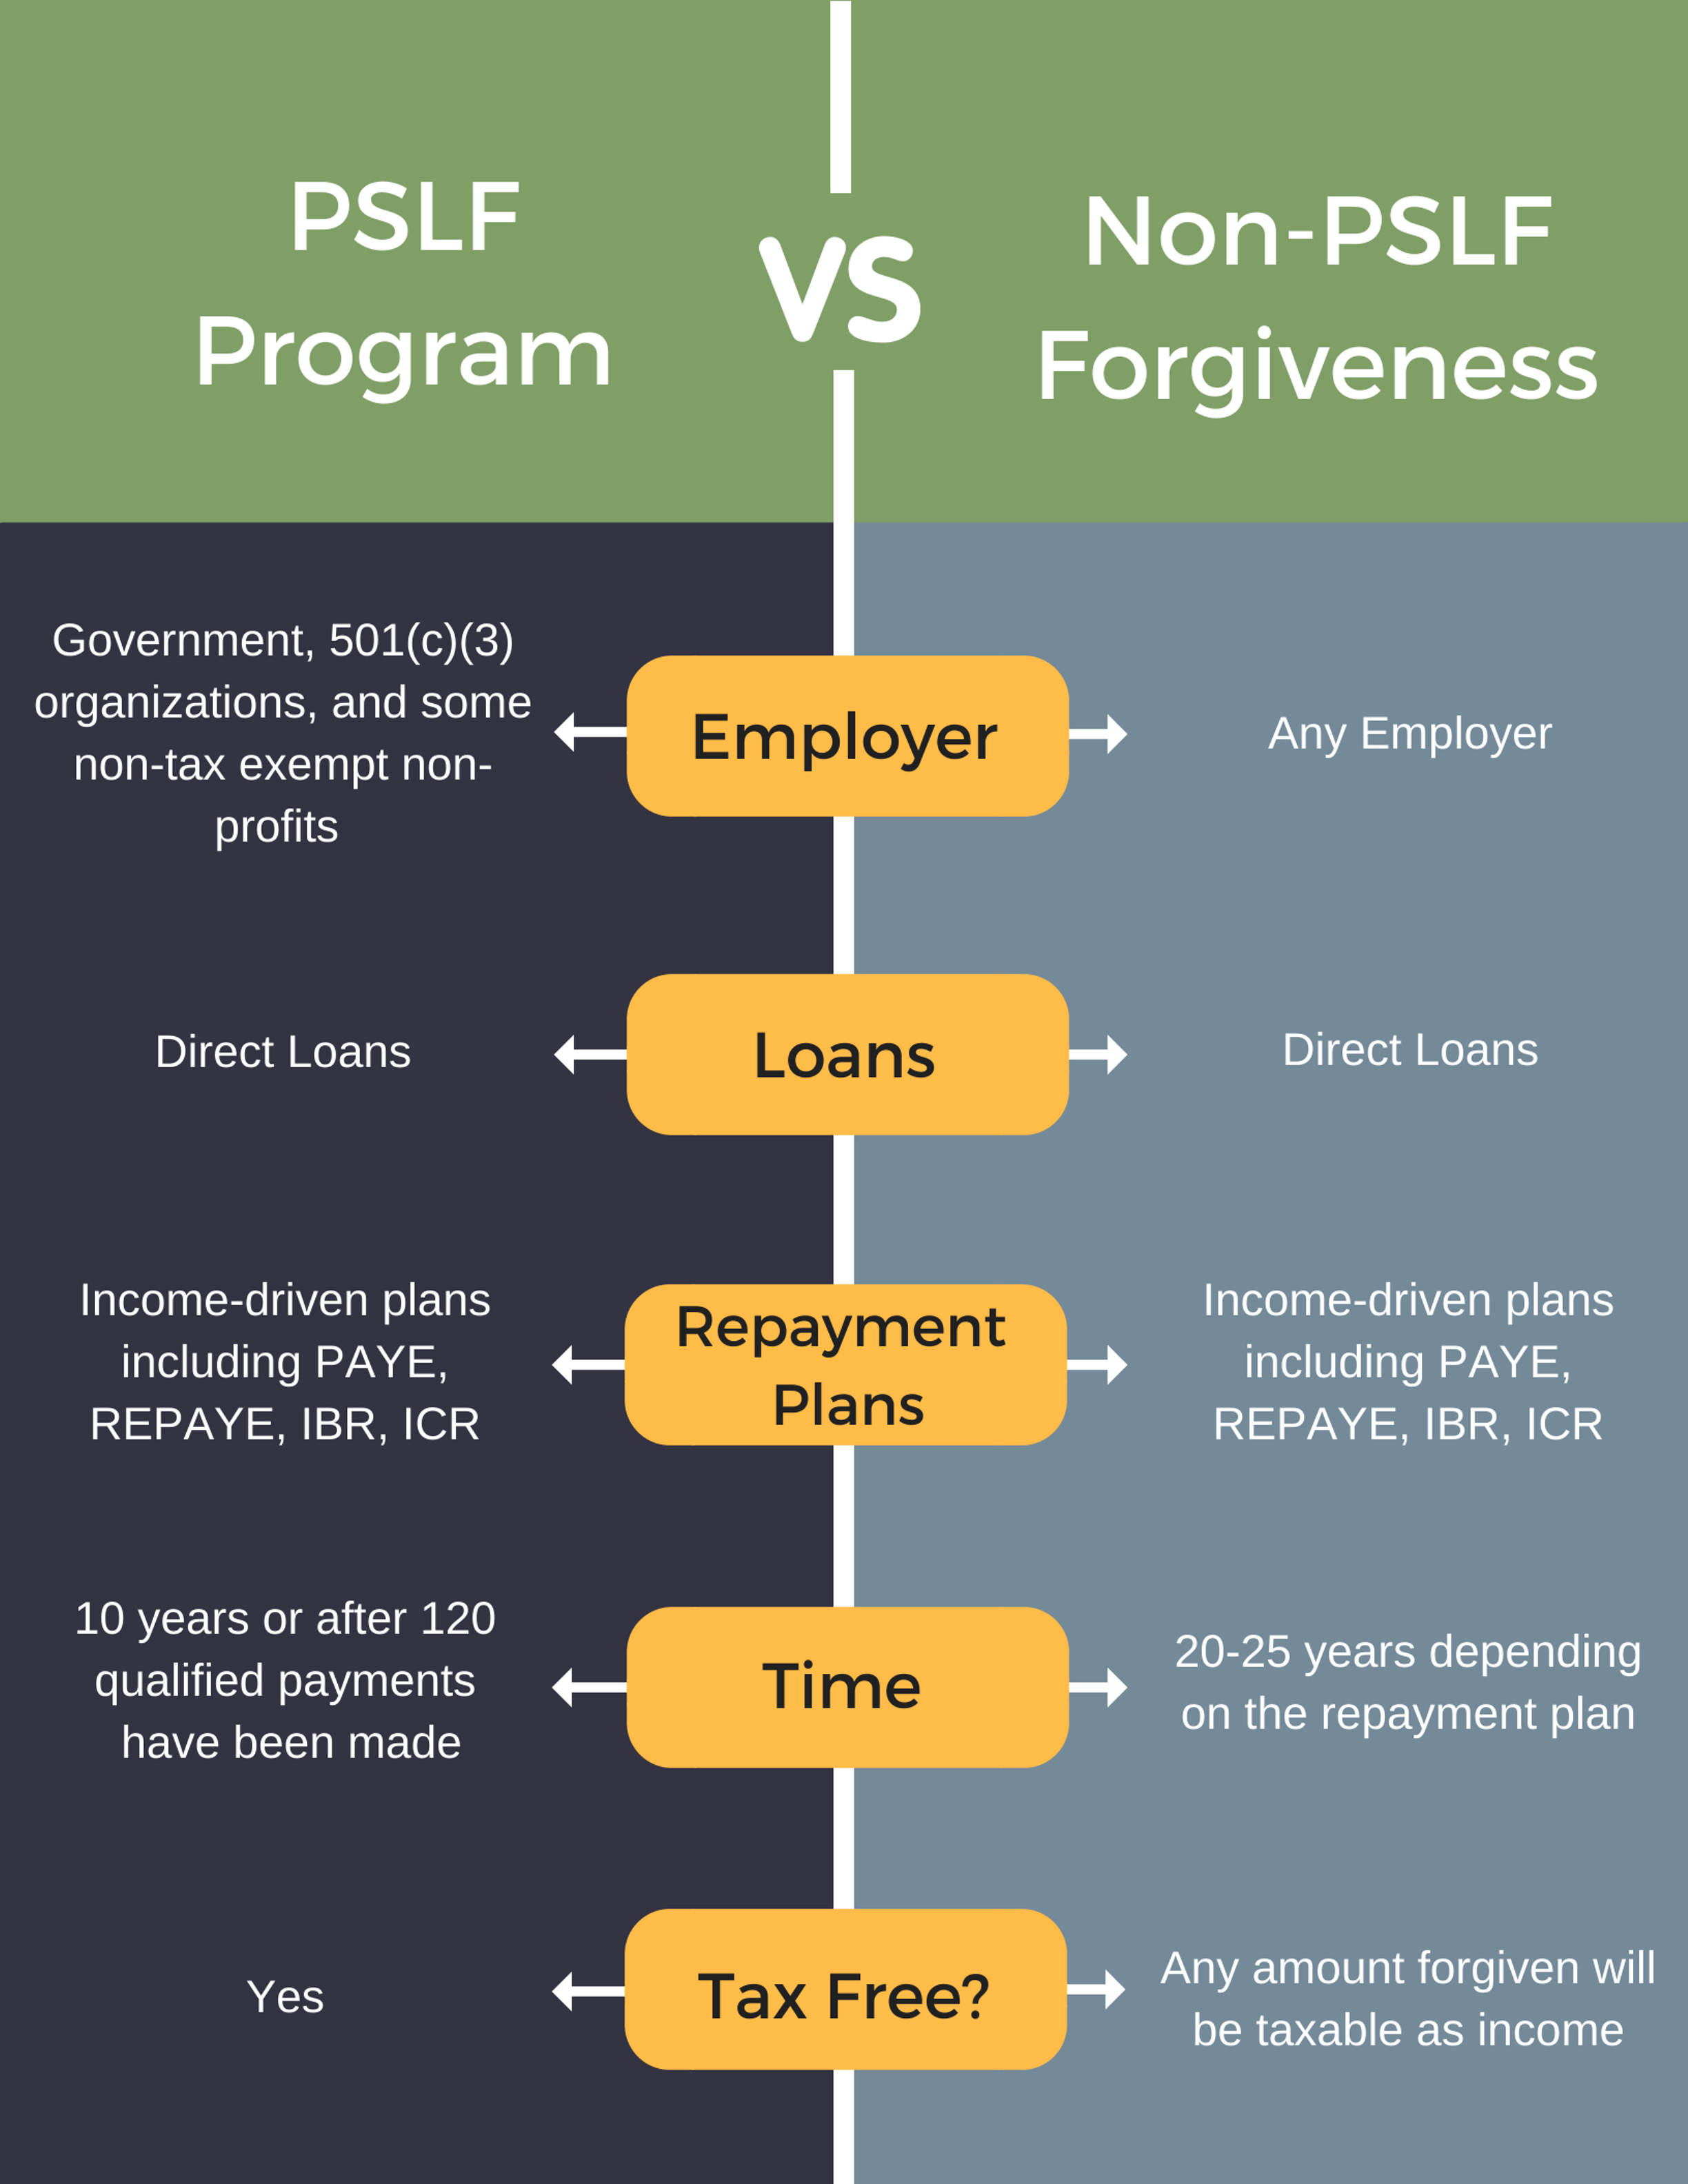 public service loan forgiveness